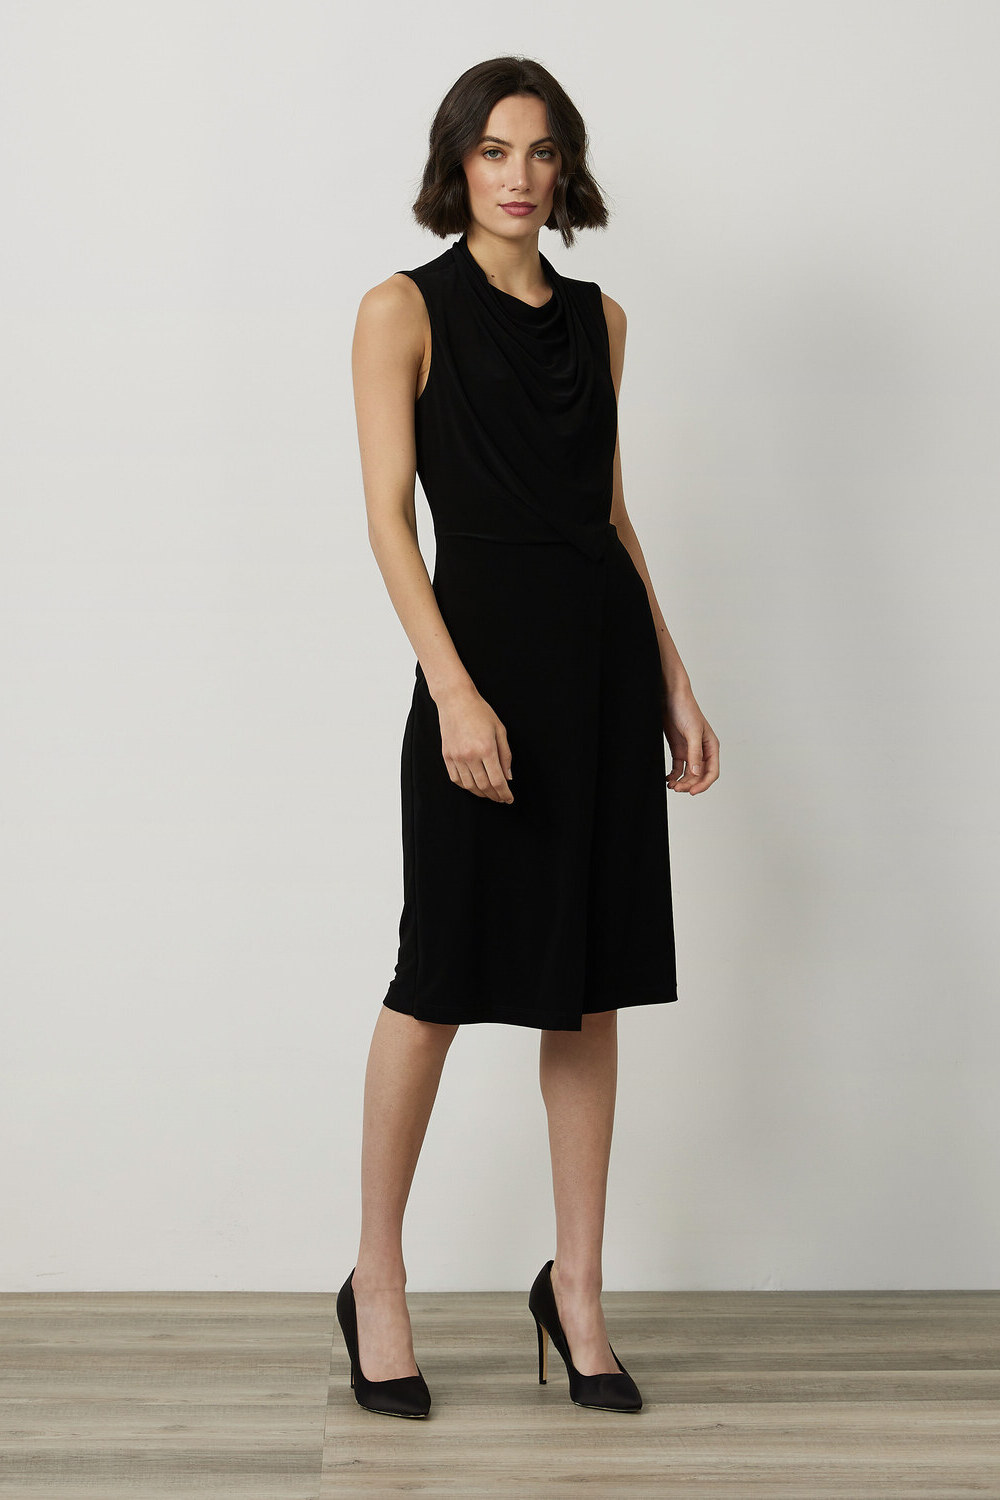 Joseph Ribkoff Cowl Neck Sleeveless Dress Style 214238. Black